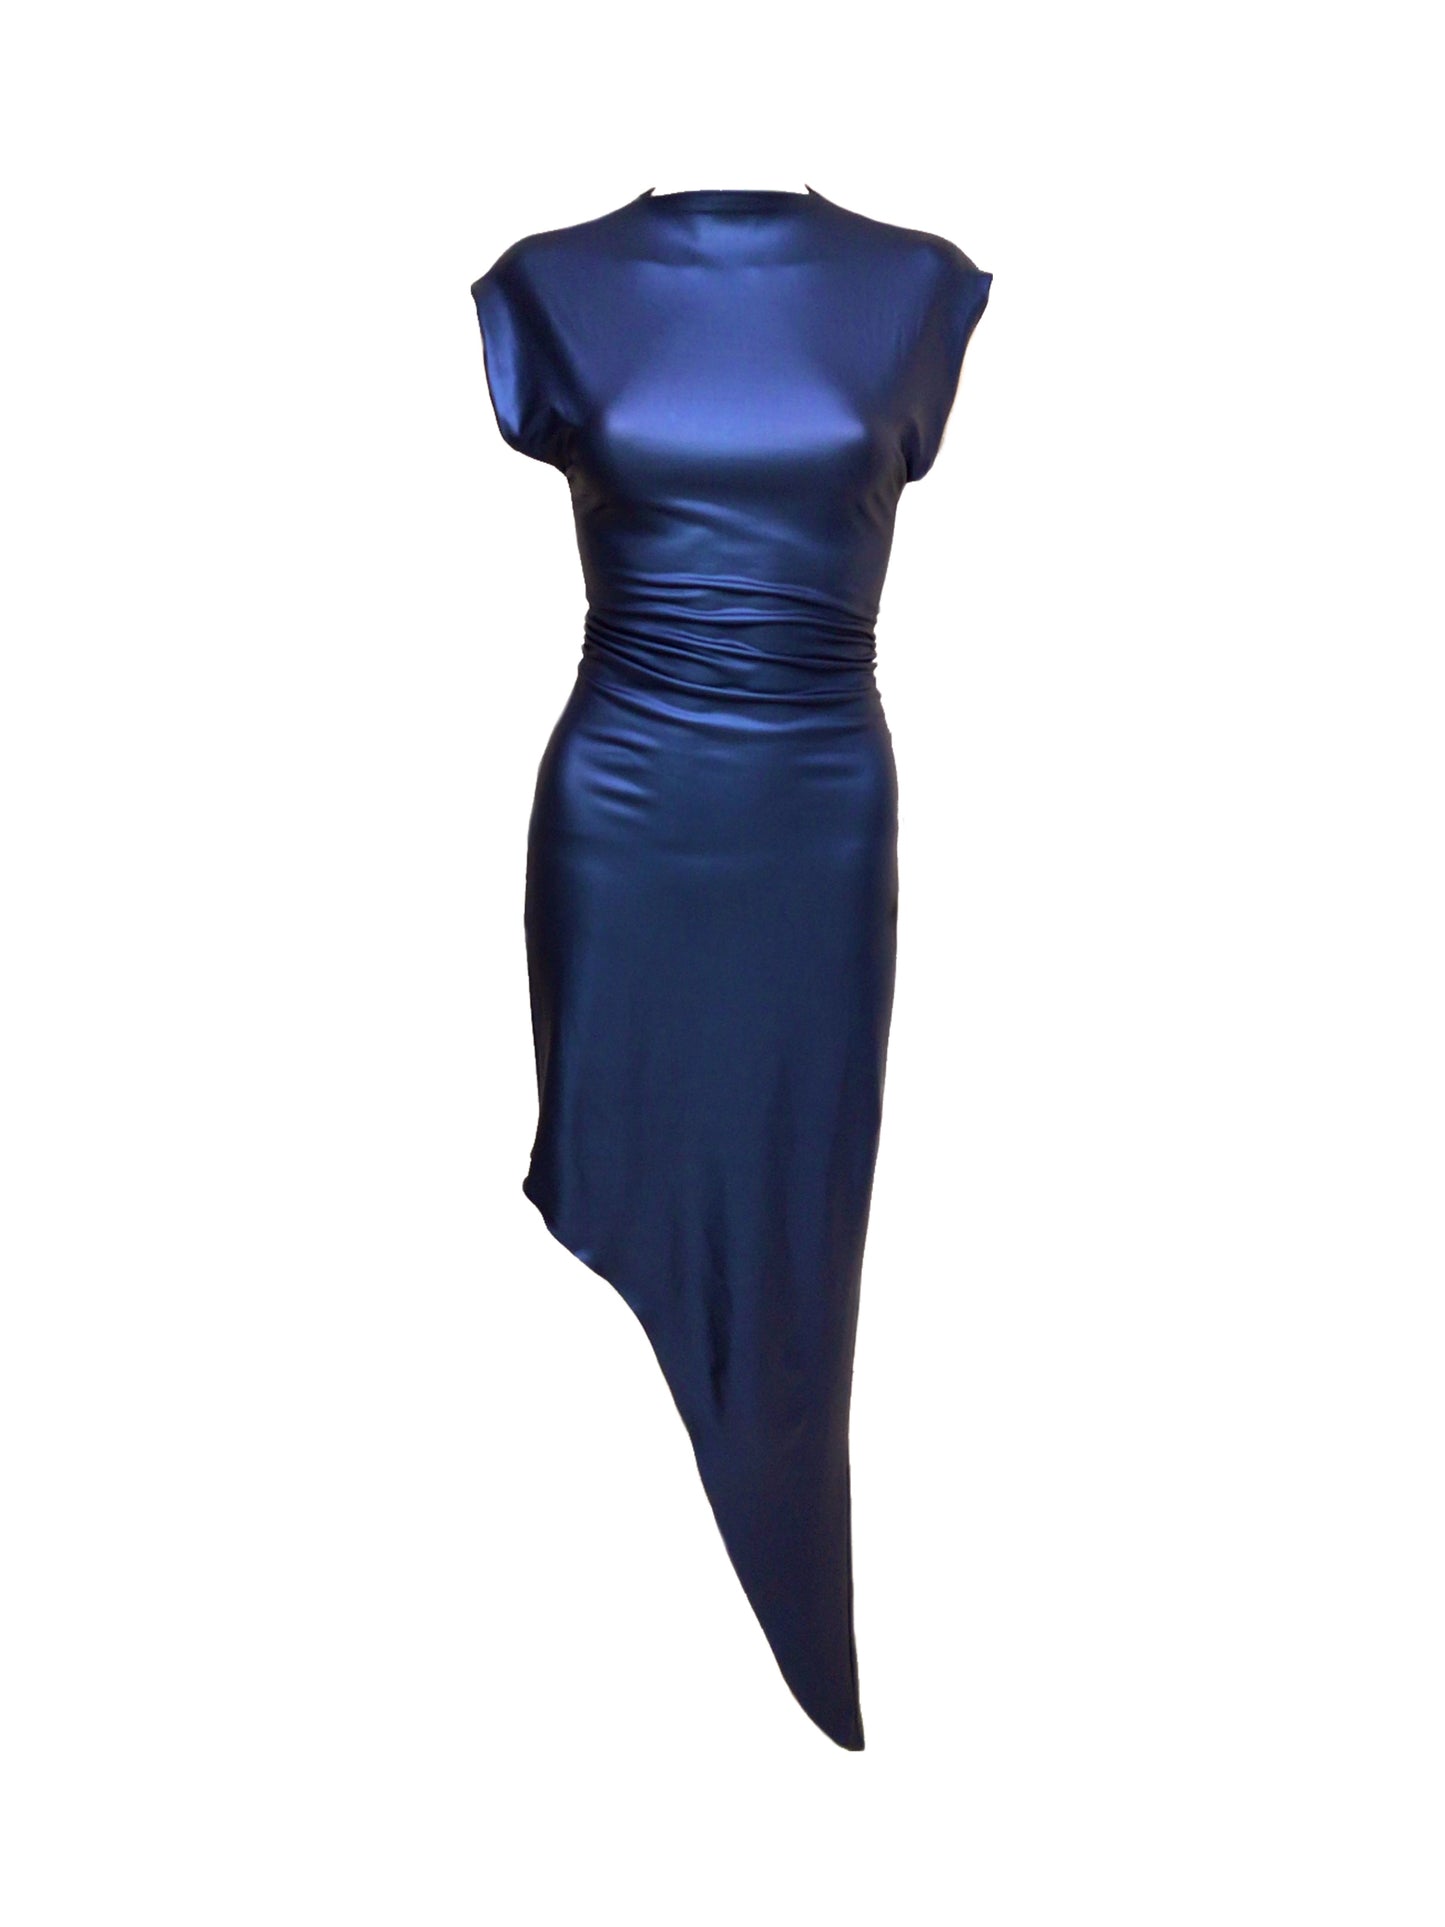 Electric Blue Pleather Dress